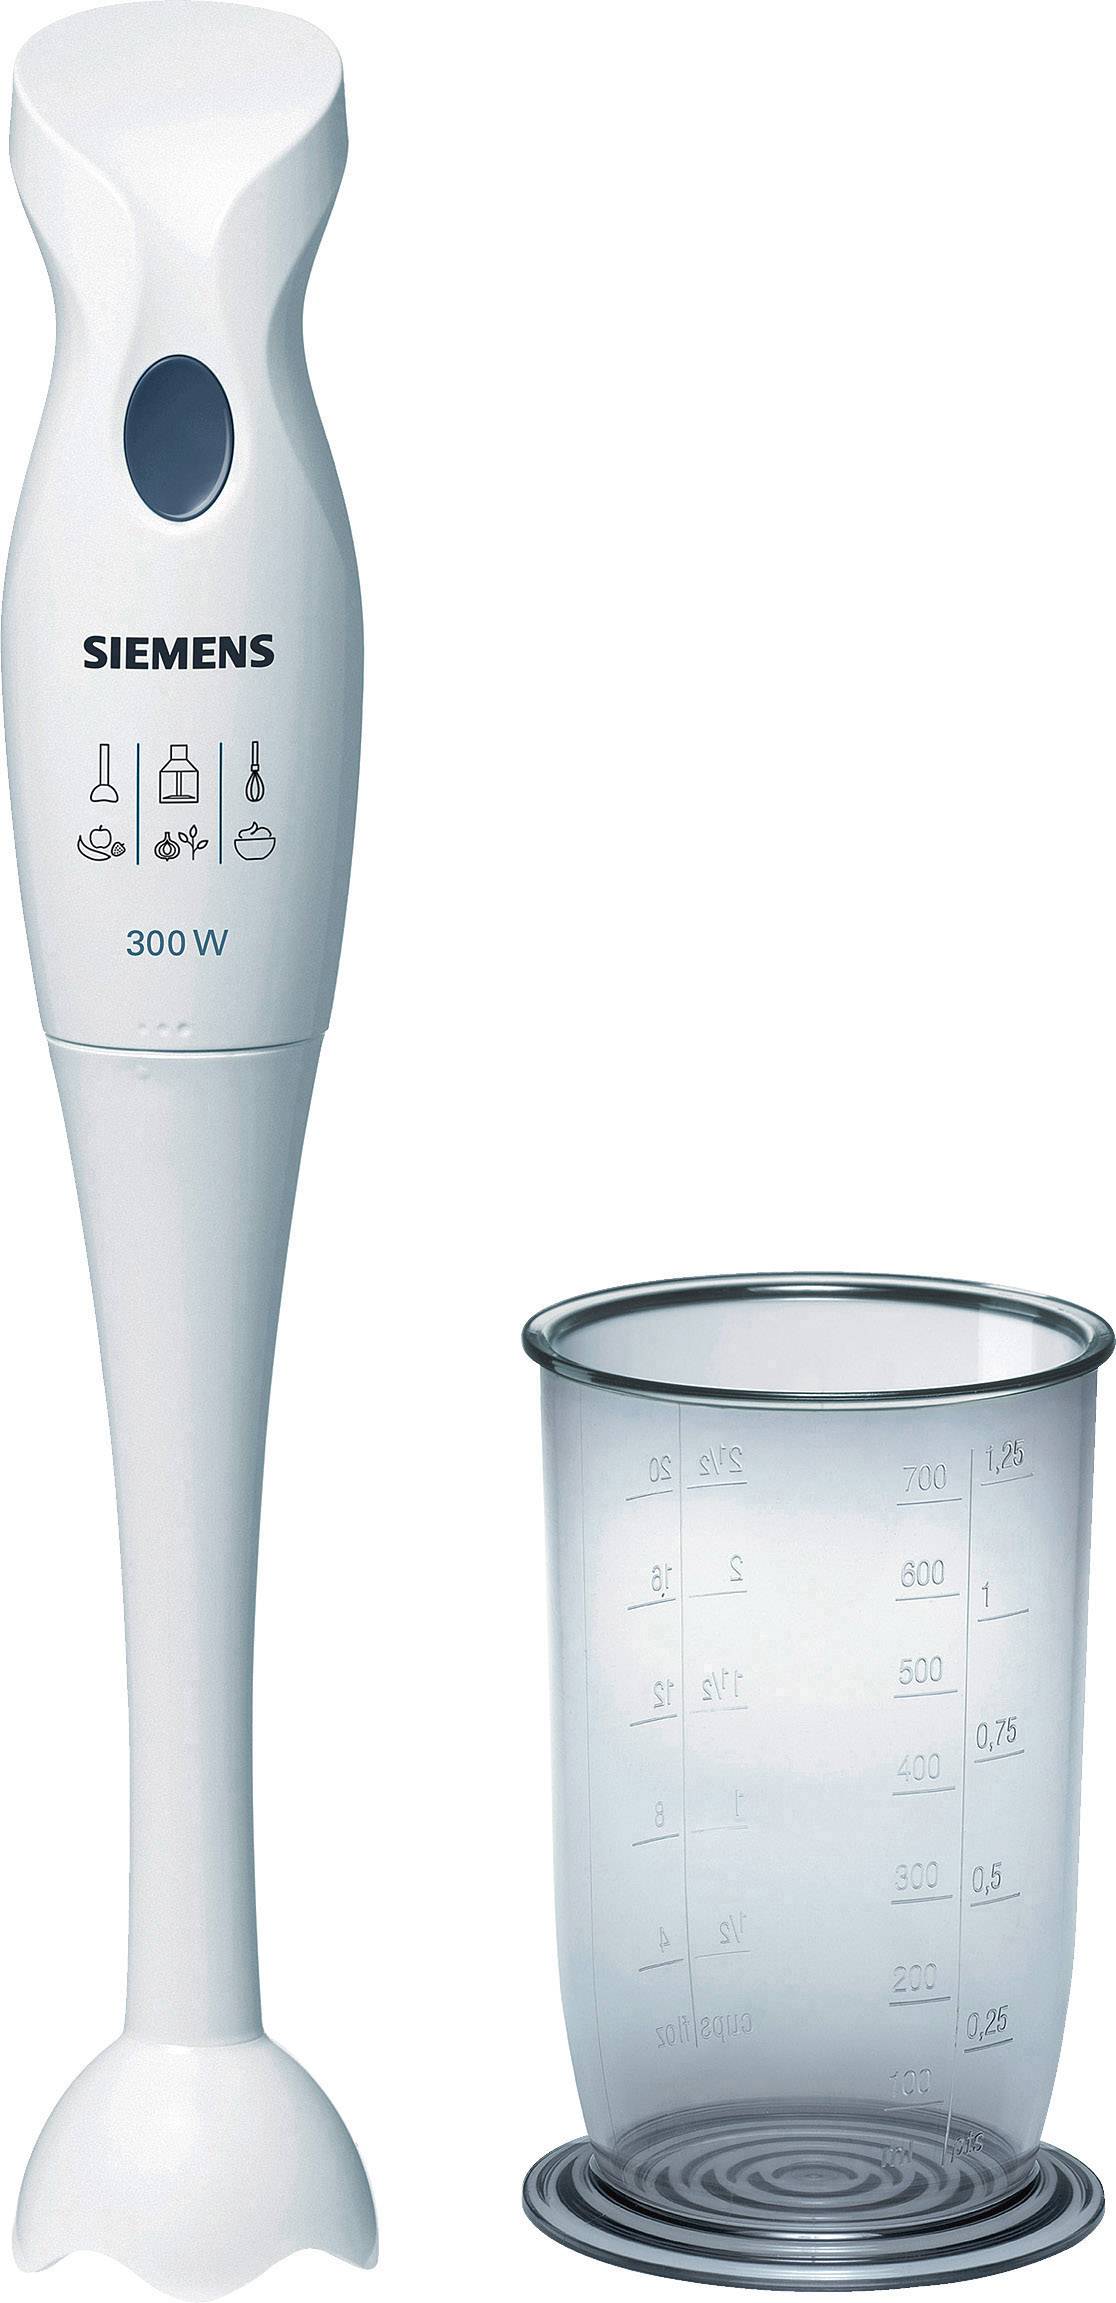 Siemens Hausgeräte MQ5B150N blender 300 W with mixing jar White | Conrad.com